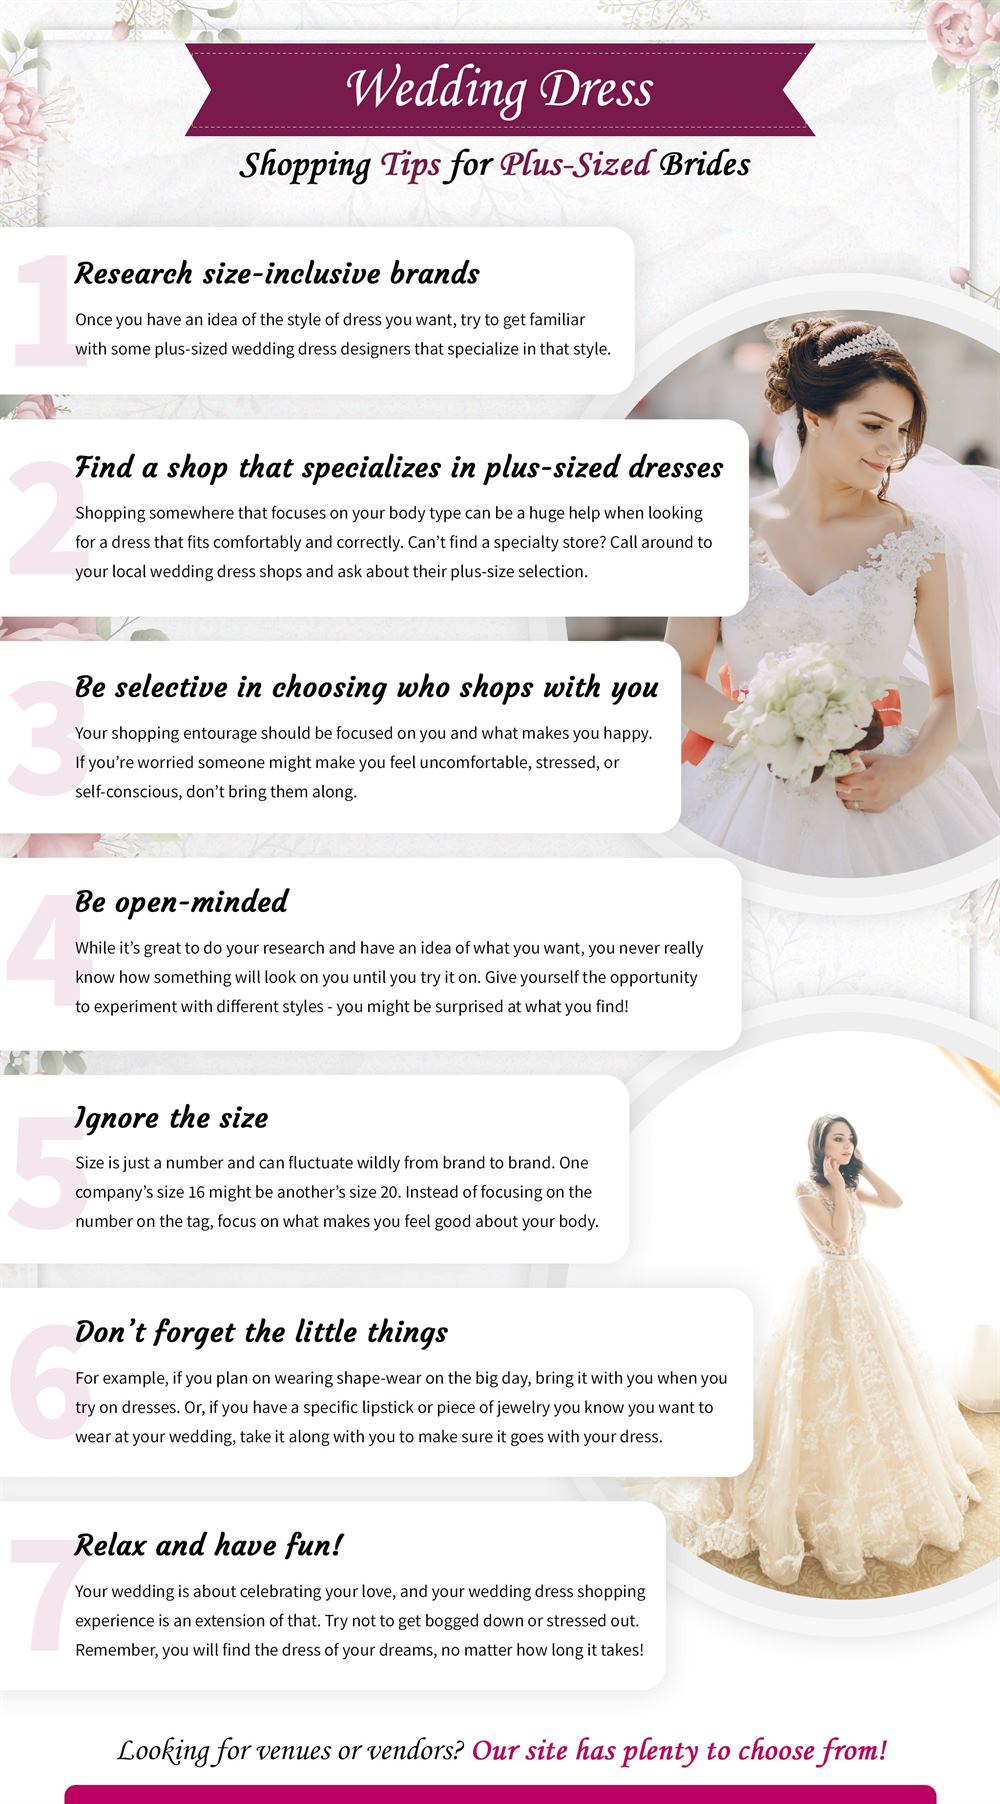 tips for plus size brides